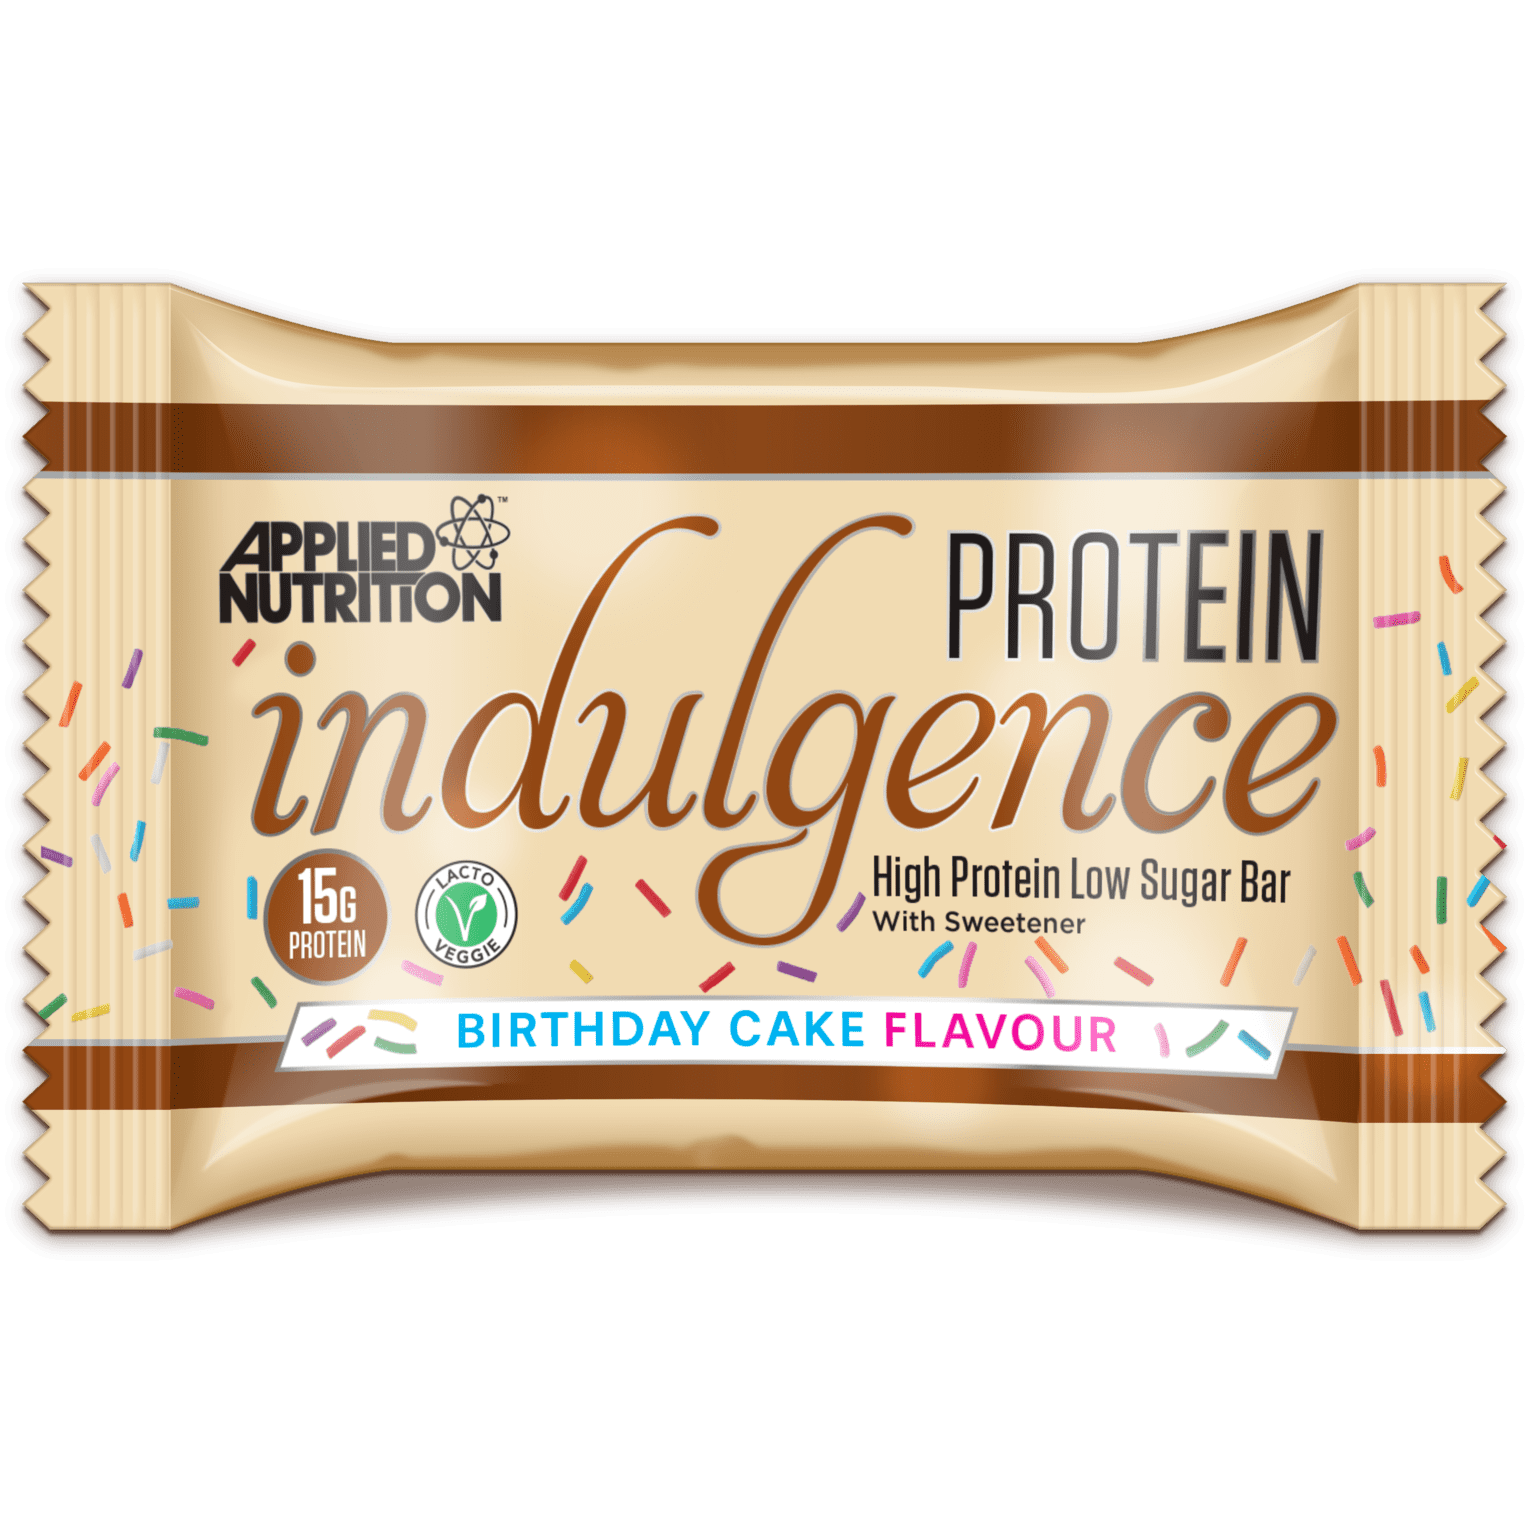 Applied Nutrition Protein Indulgence Bar 1 Bar Birthday Cake